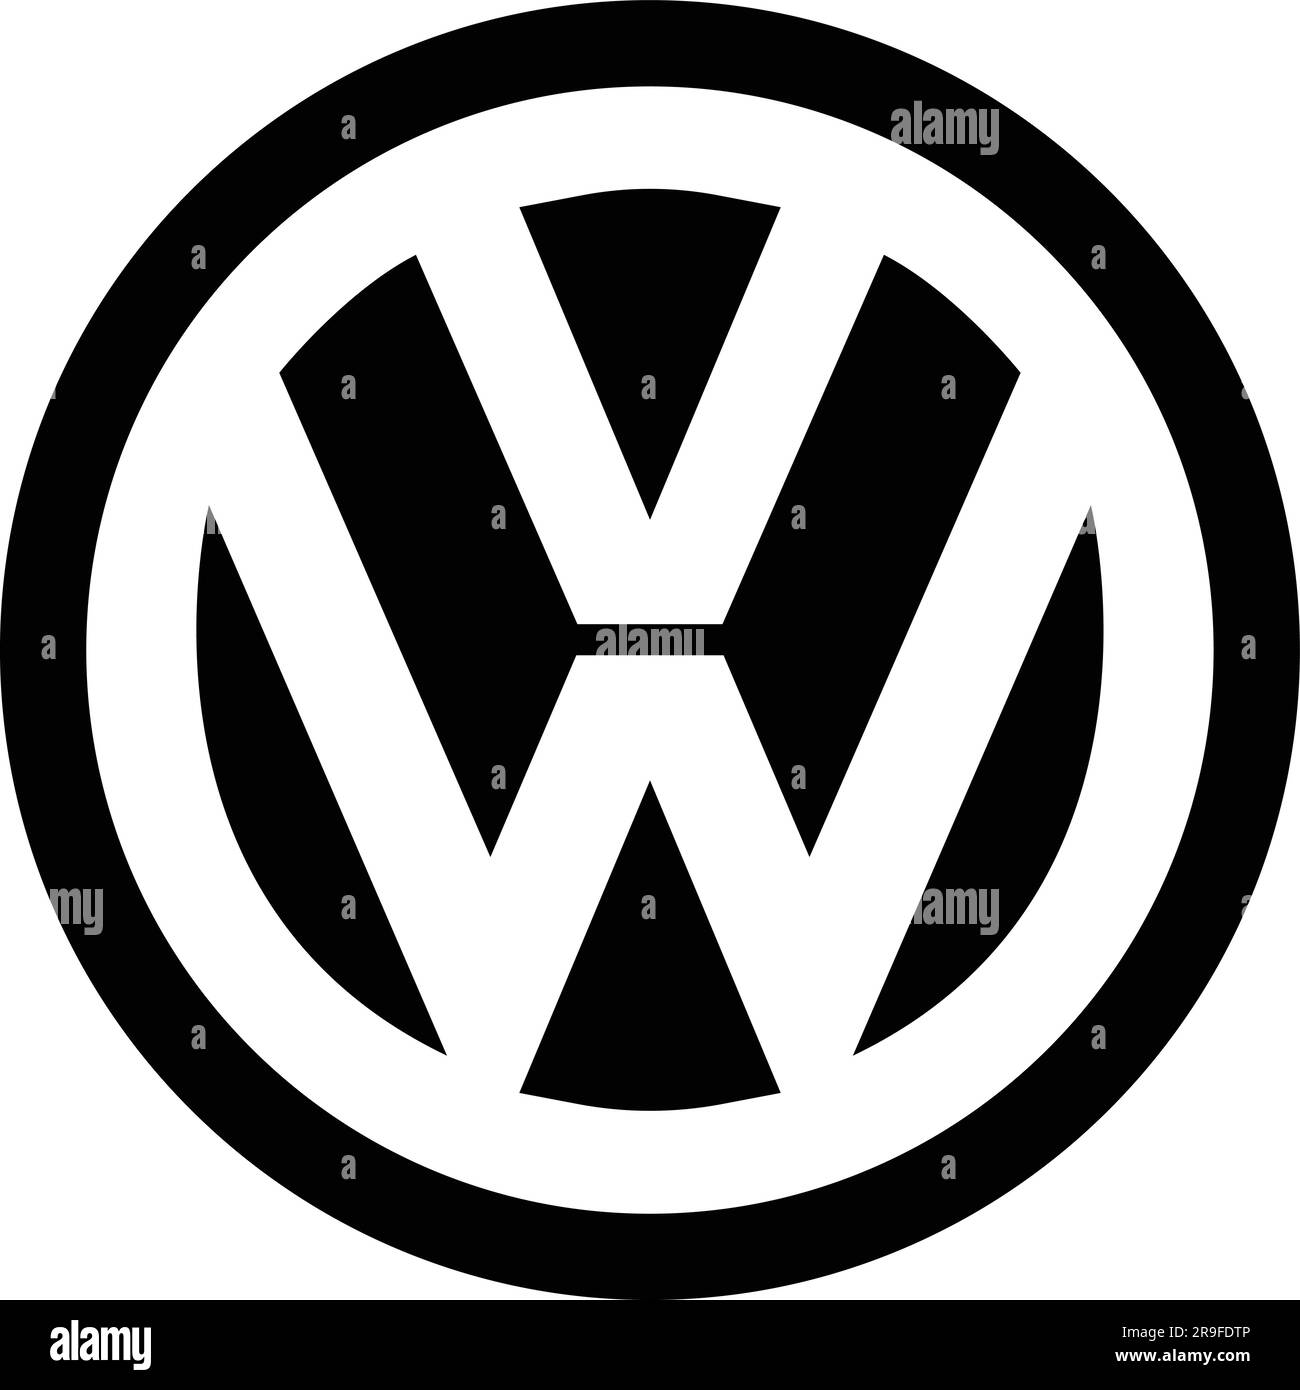 Volkswagen logo icon car brand sign symbol famous label identity style Top automotive industry leader art design vector. Black automobile emblem sign Stock Vector